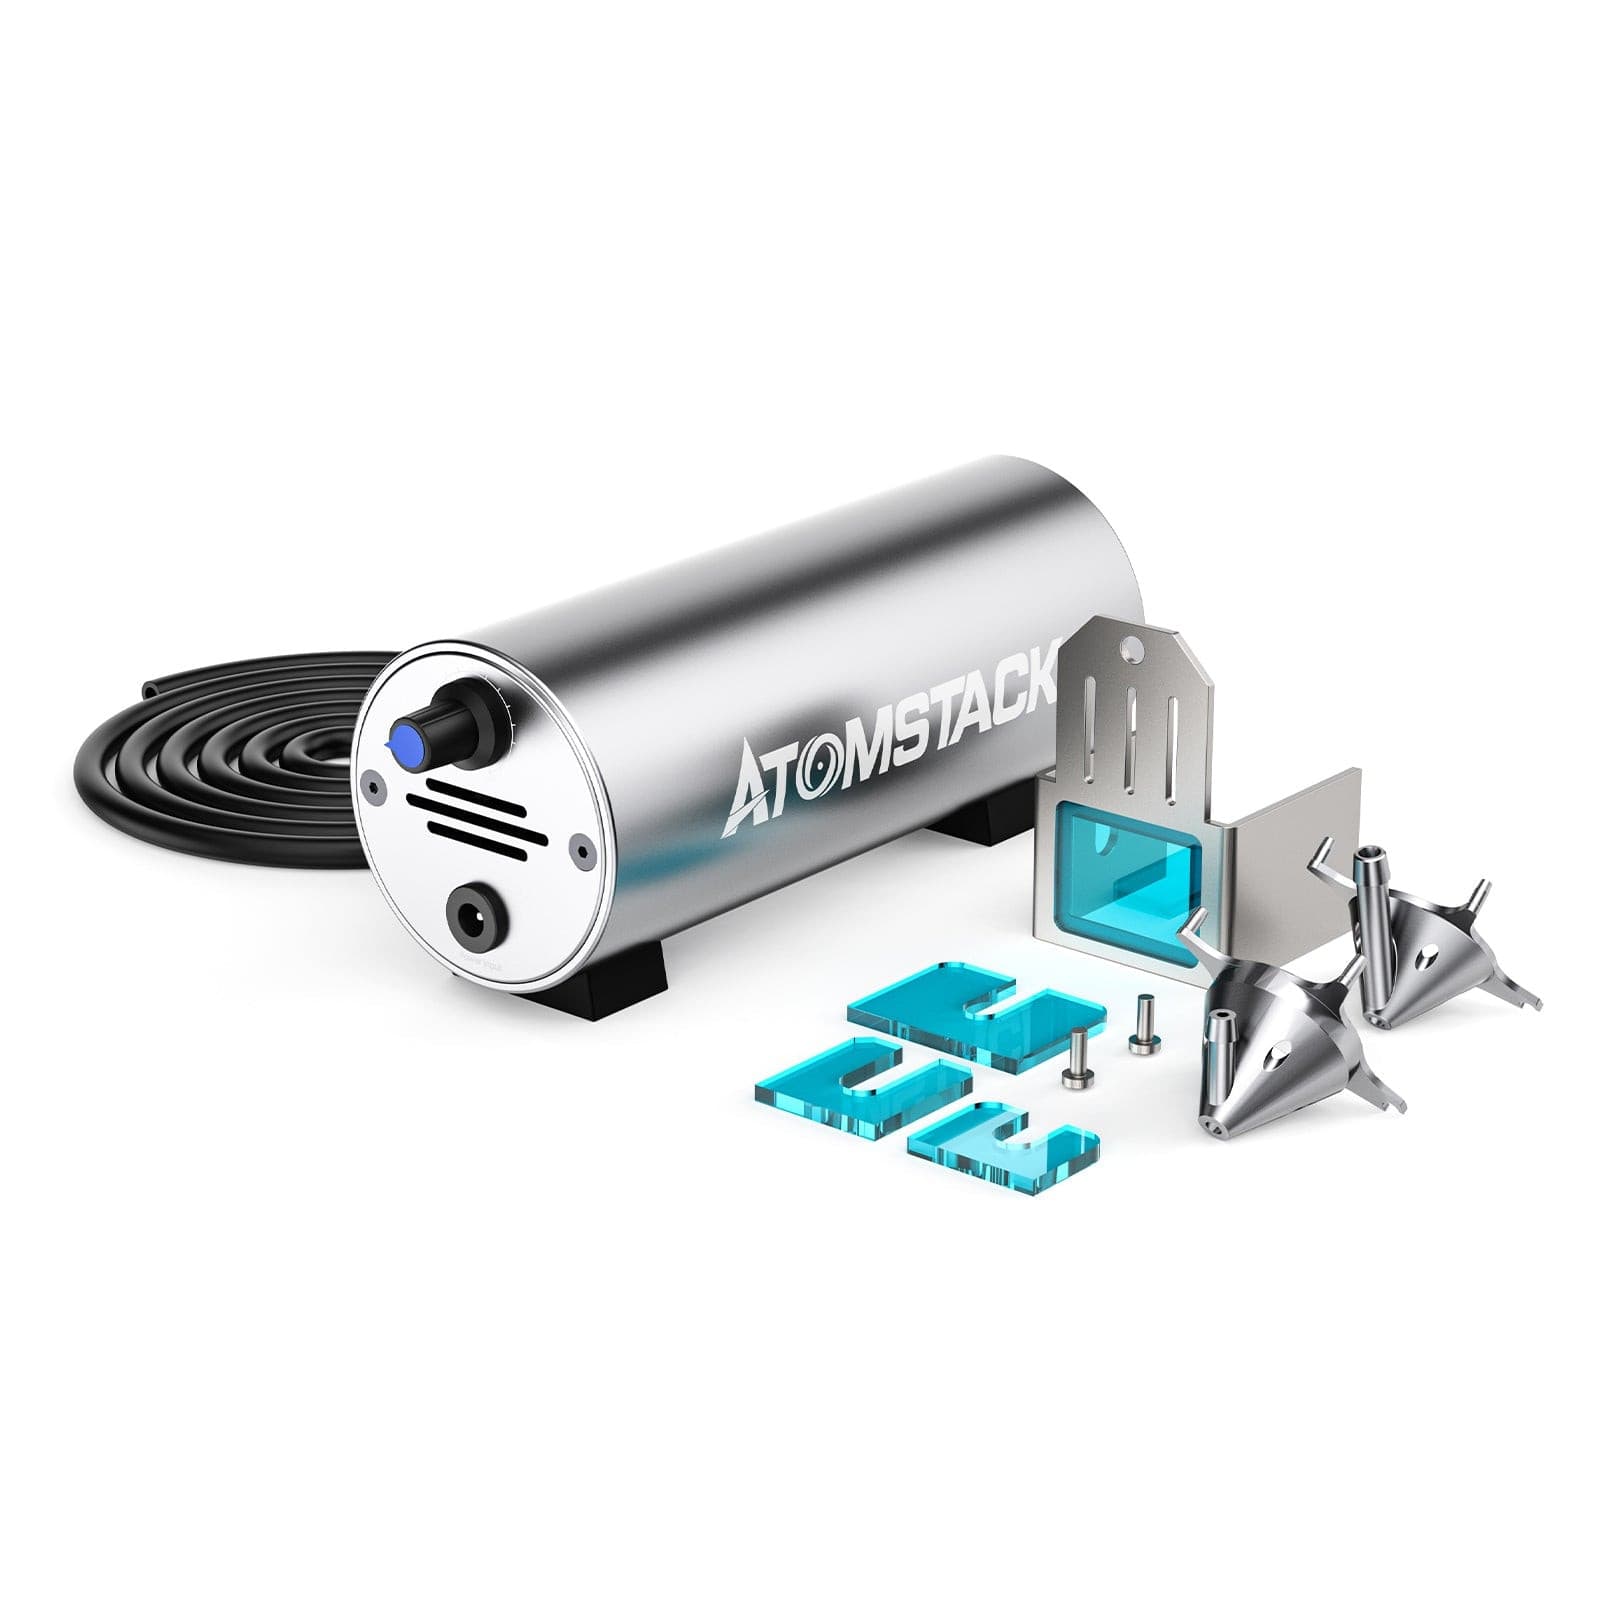 30W Laser Engraver ATOMSTACK DIY Precise Fixed-Focus Laser Cutter